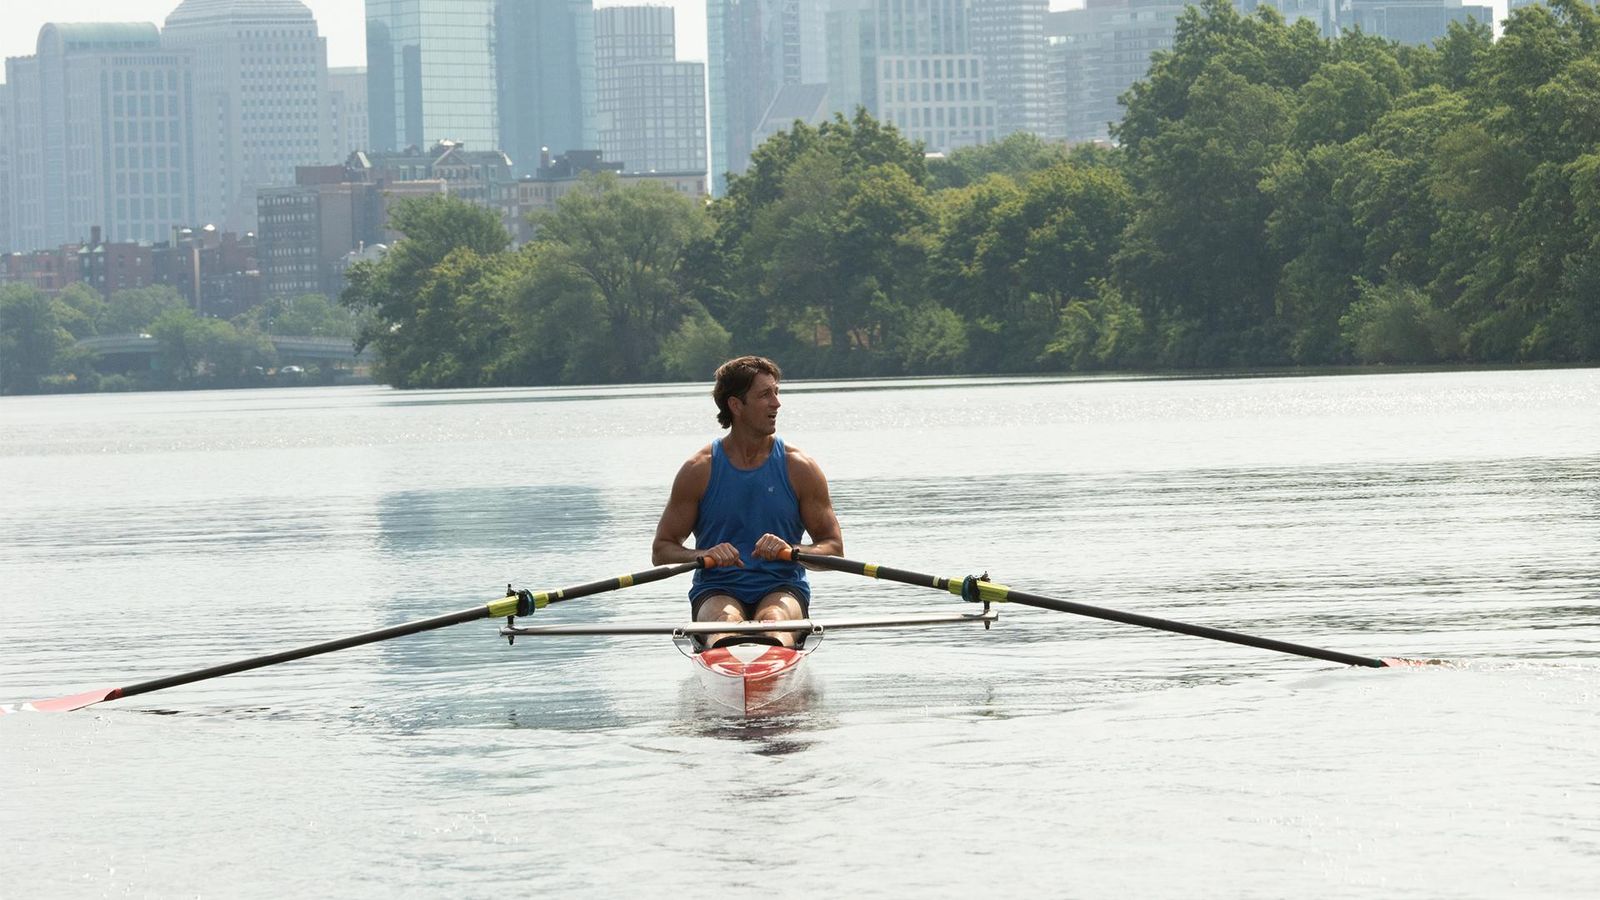 Chris Liwski, Lawyer, Cambridge, US, rowing on the River Charles